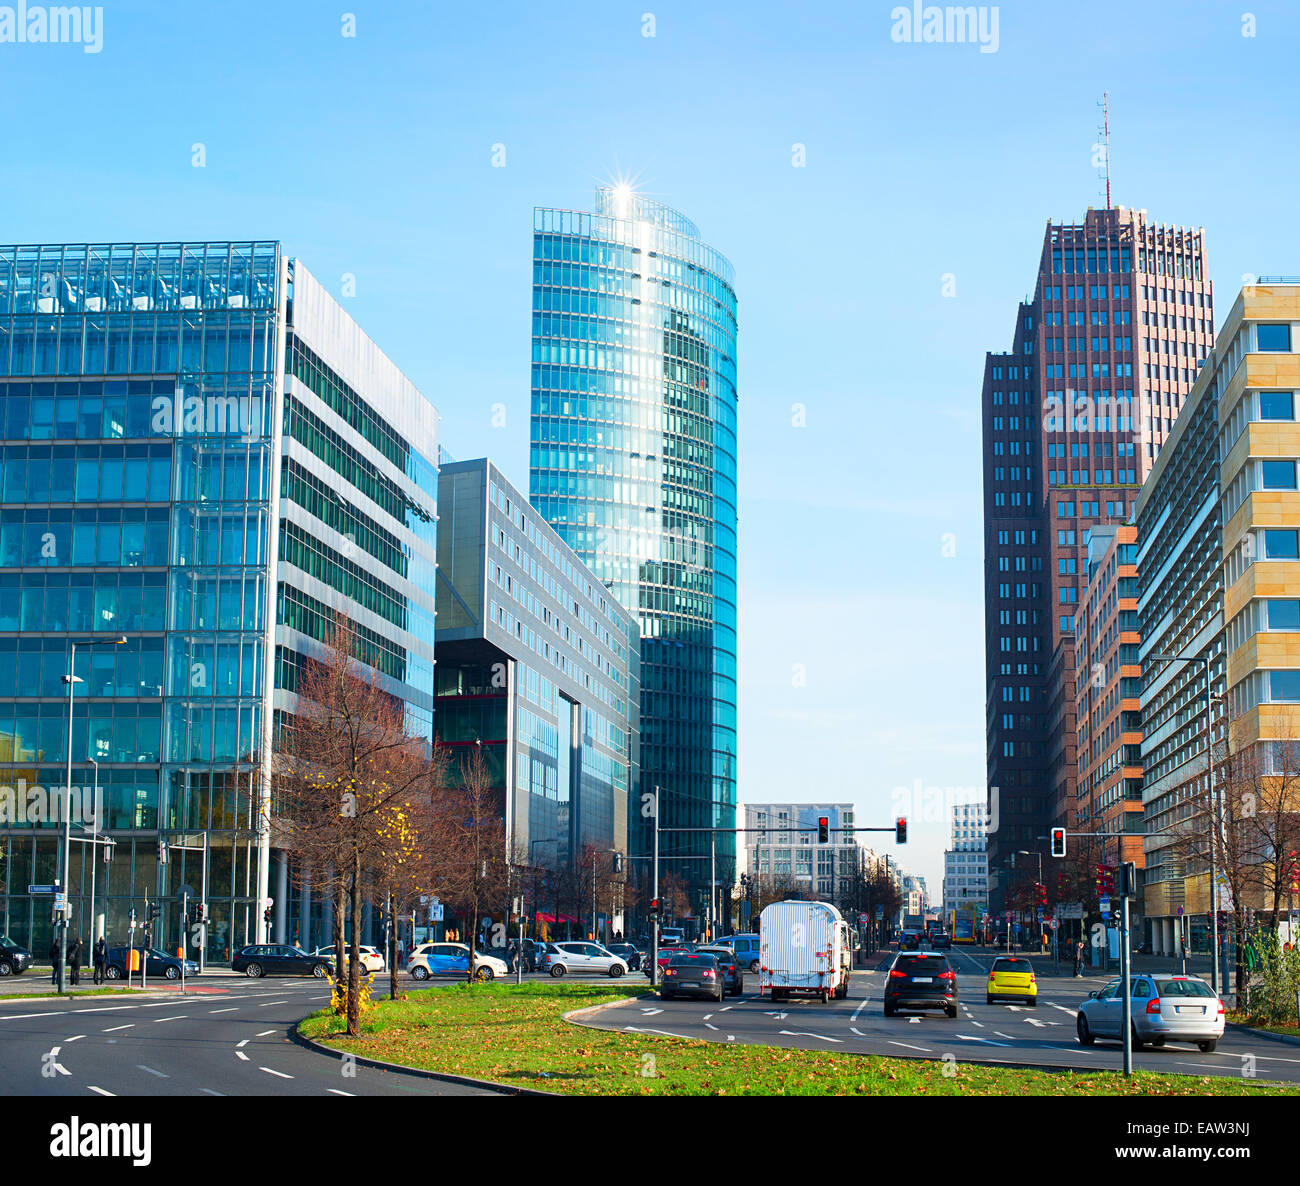 View of Potsdamer platz  - financial district of Berlin, Germany Stock Photo